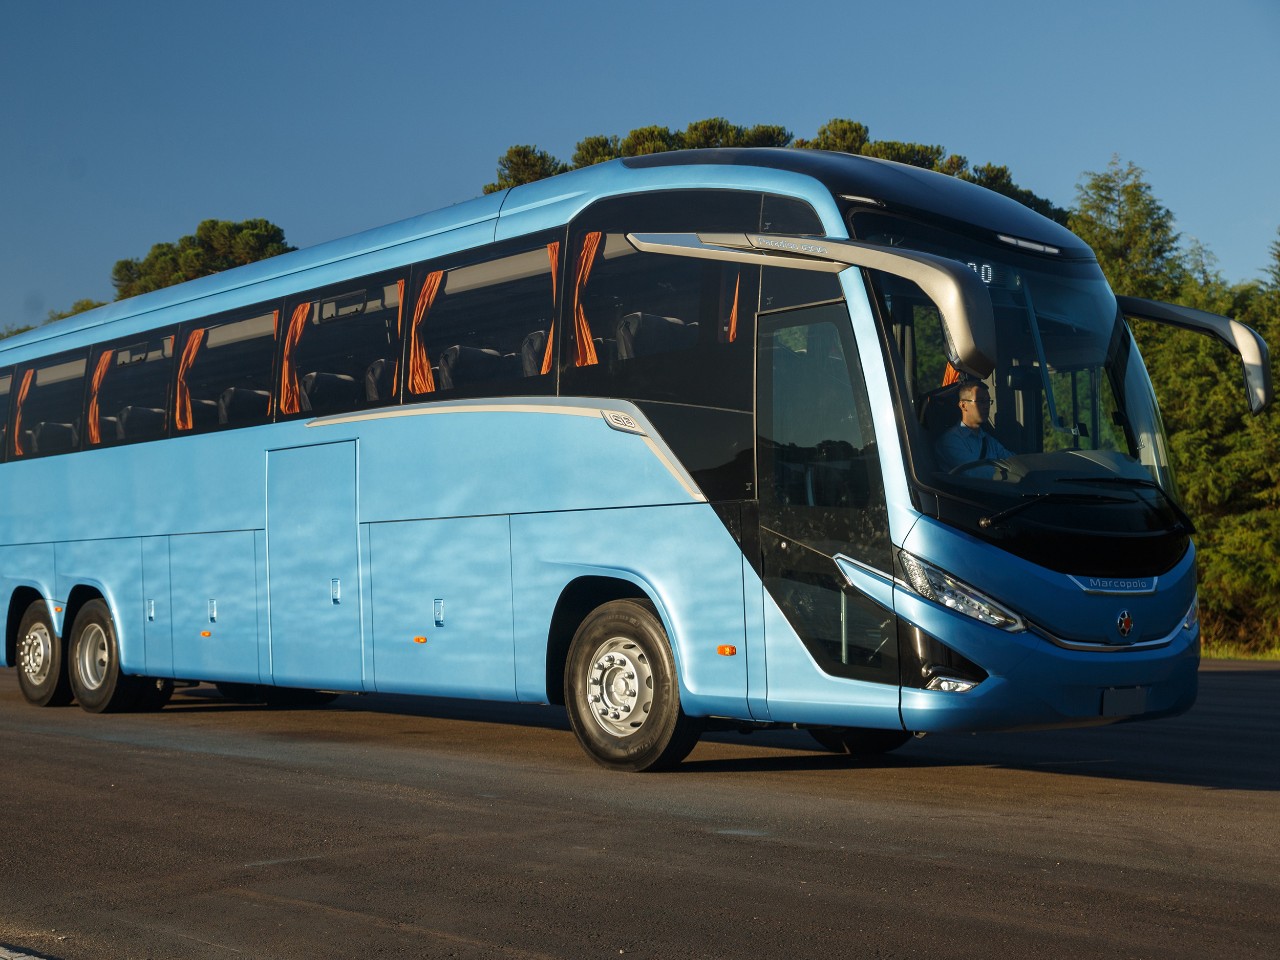 Interor design features Scania Marcopolo